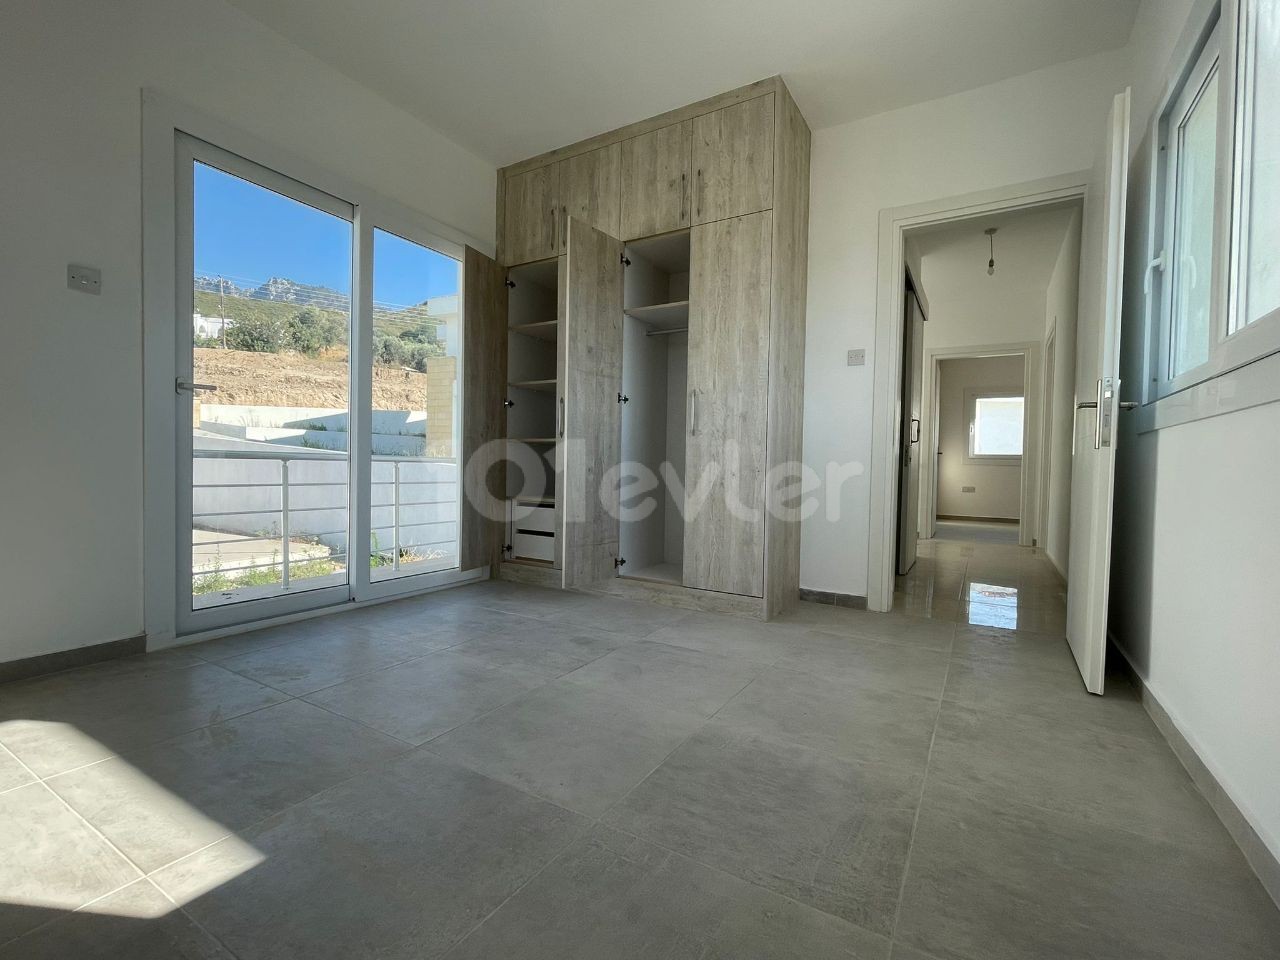 600 m2 Ultralux Villa mit Pool in Kyrenia Yesiltepe 235.000 Gbp ohne Pool 215.000 Gbp ** 